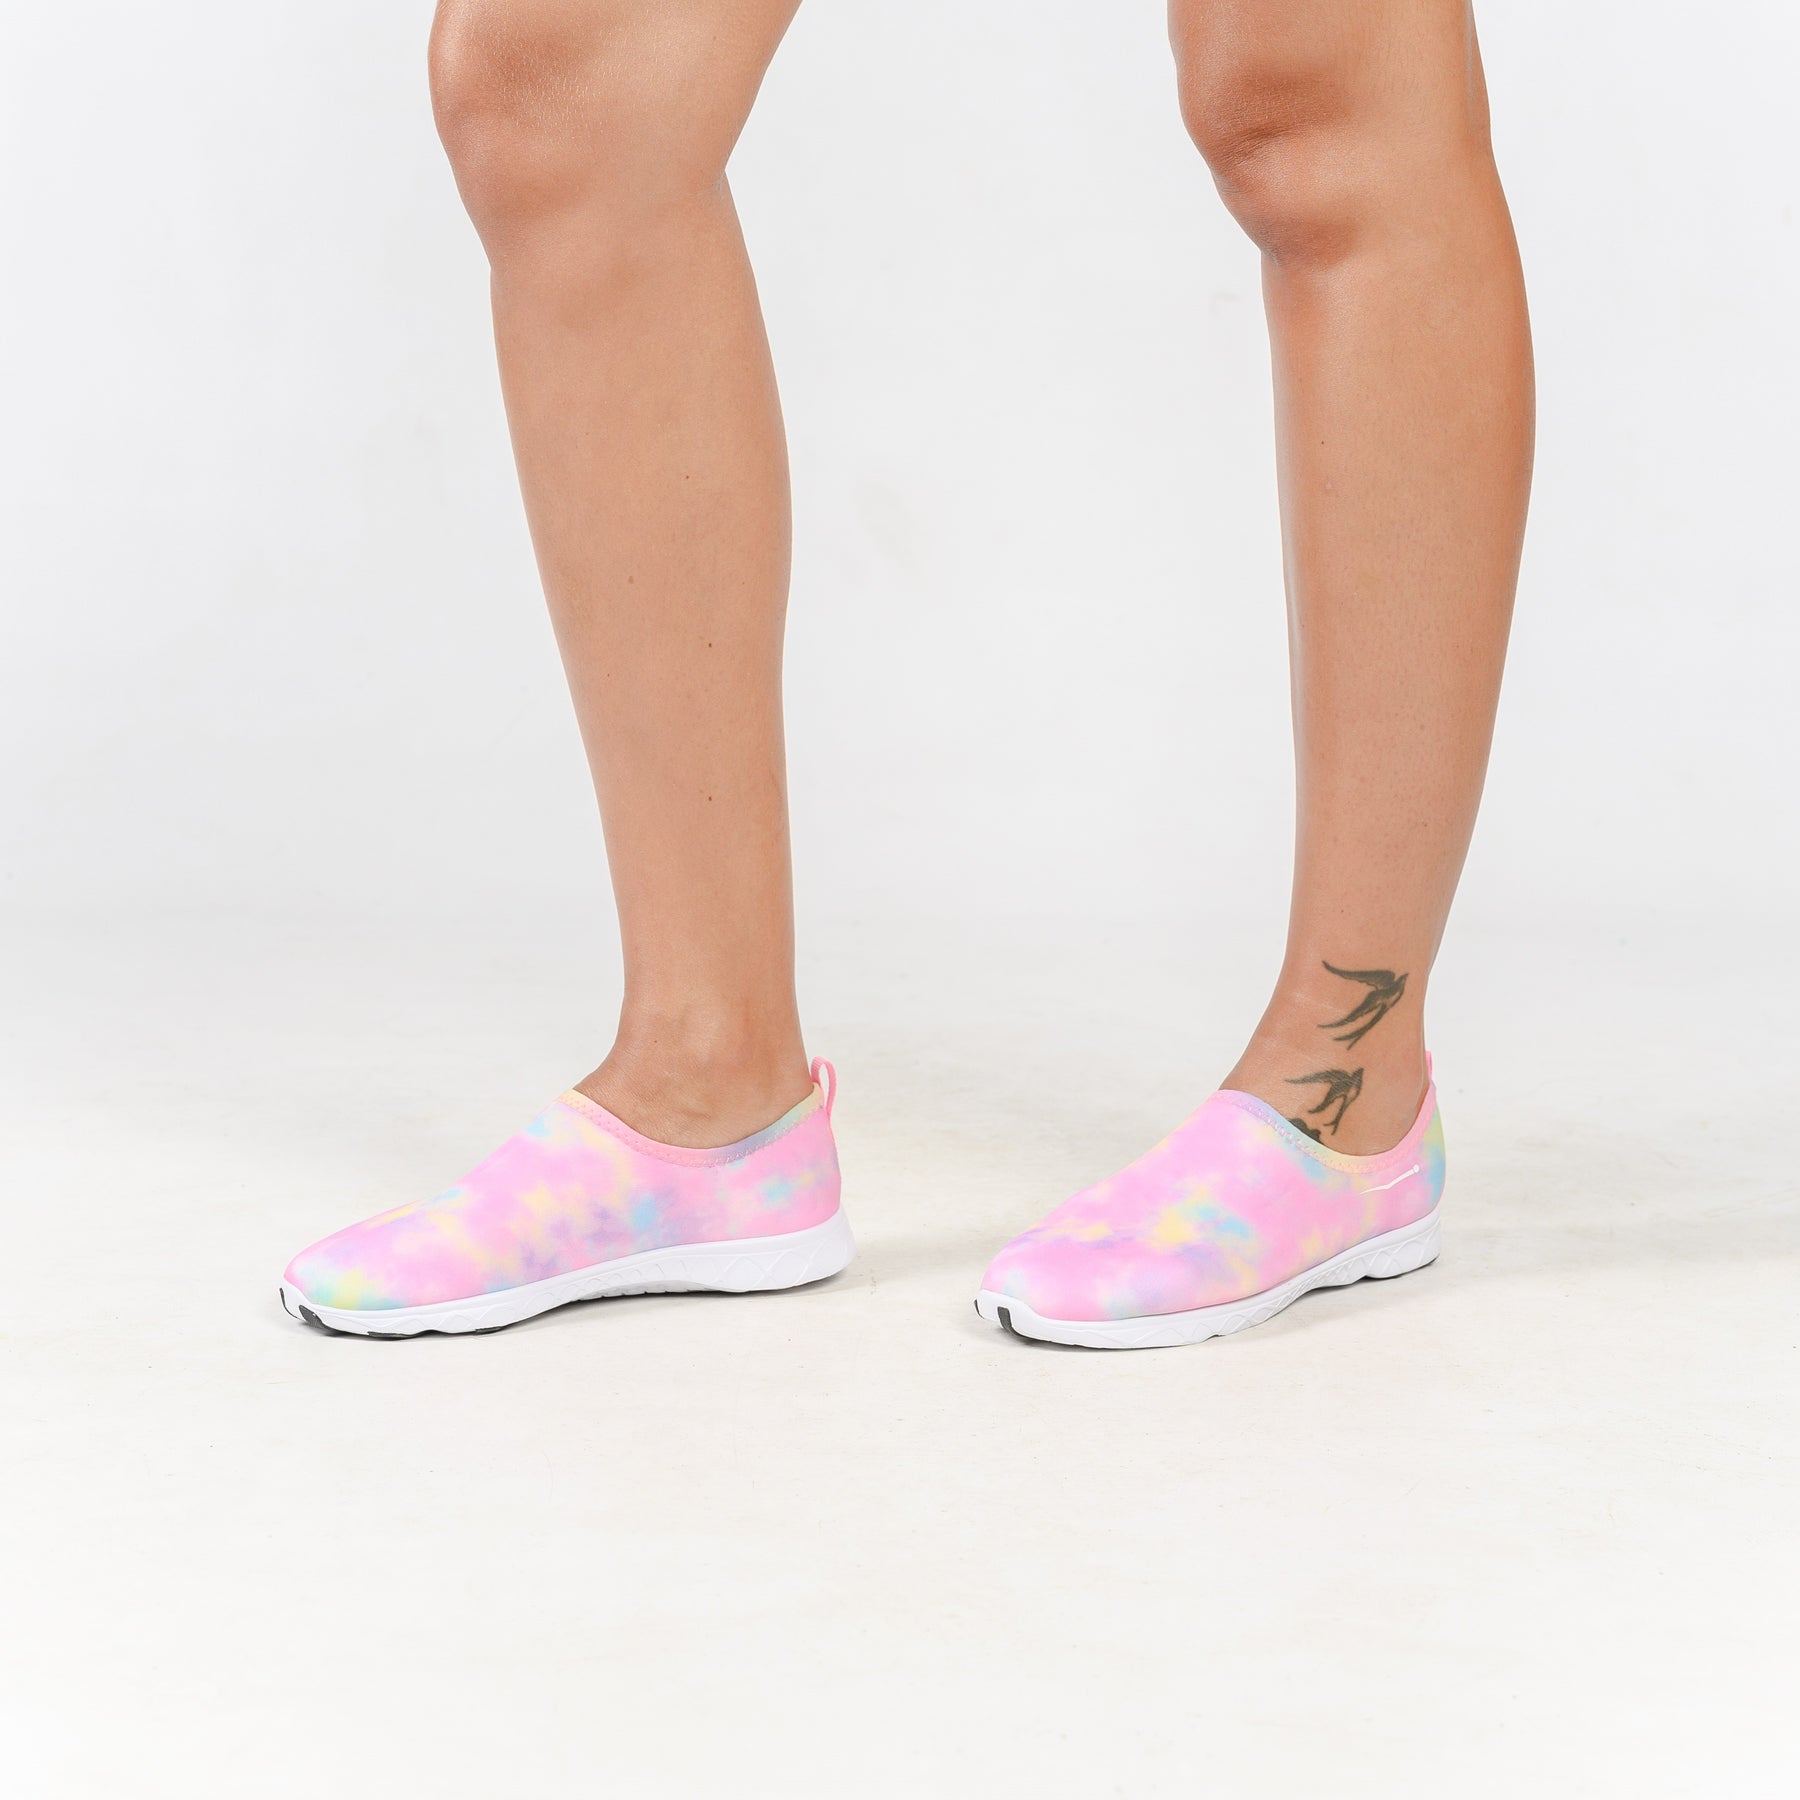 Turismo Sneakers Sale Online, pink print tie dye shirt